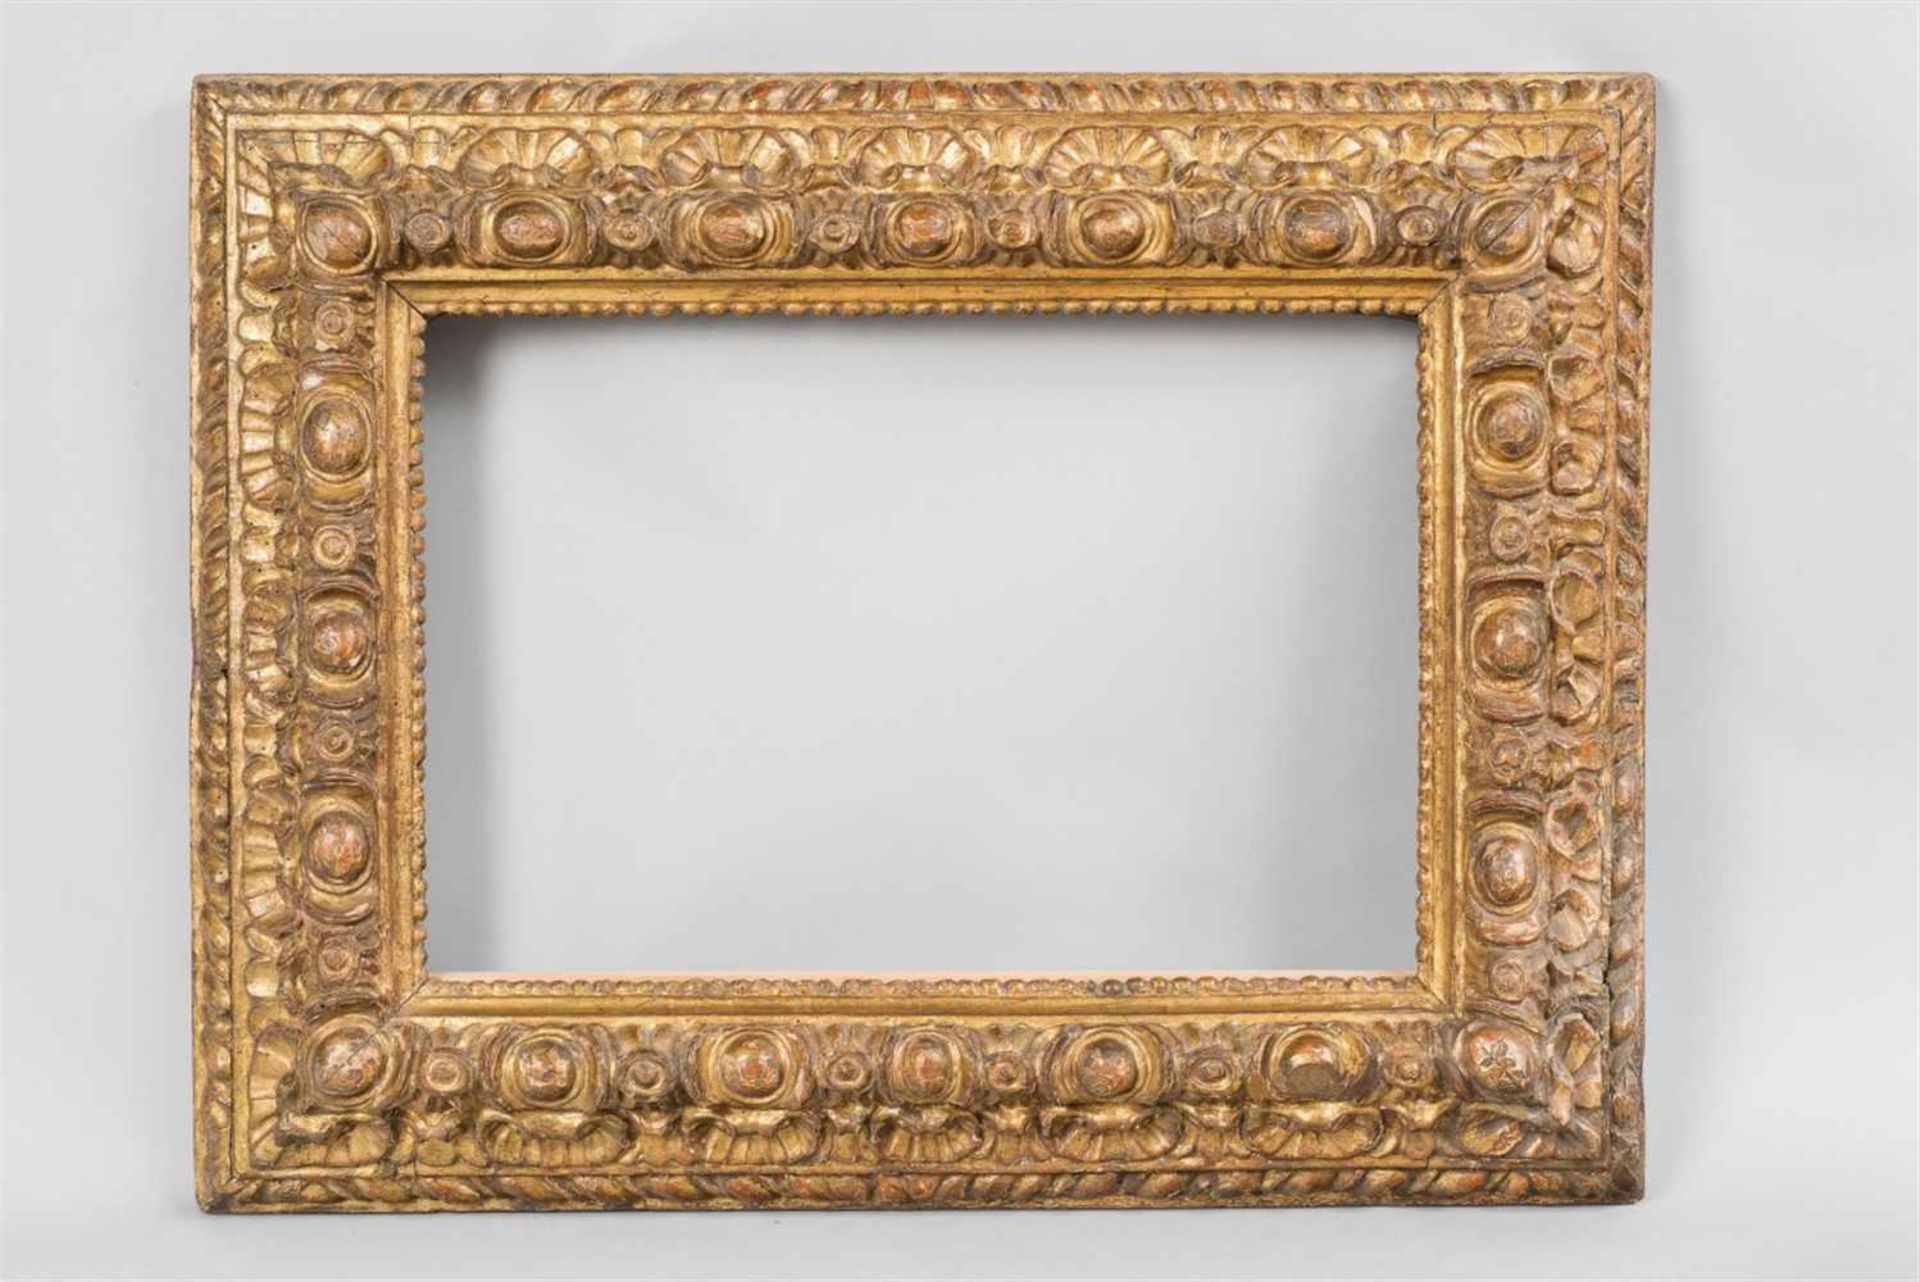 An Italian Renaissance giltwood frame76.5 cm x 58.8 cm, interior 52.7 cm x 36.5 cm. Attributed to